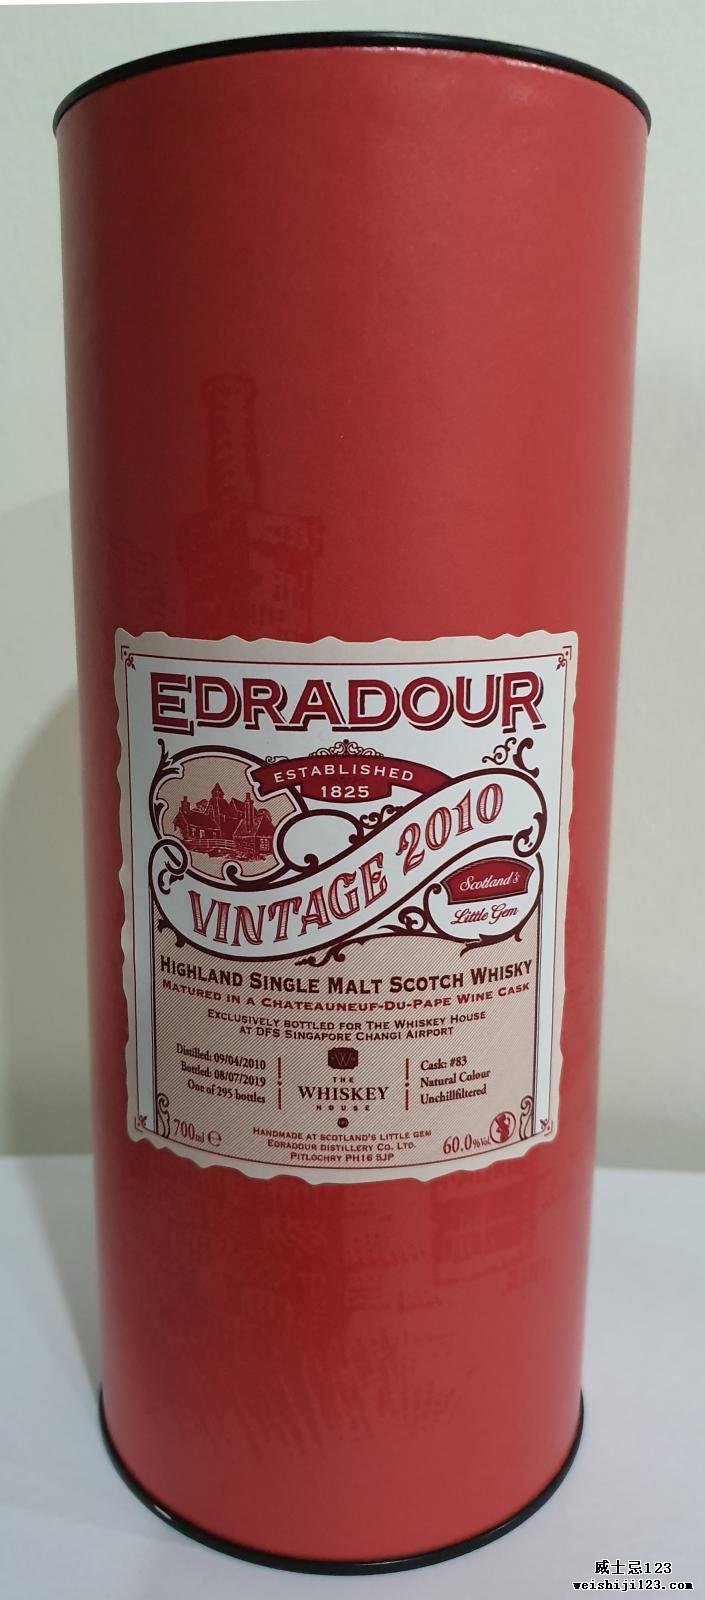 Edradour 2010 Vintage